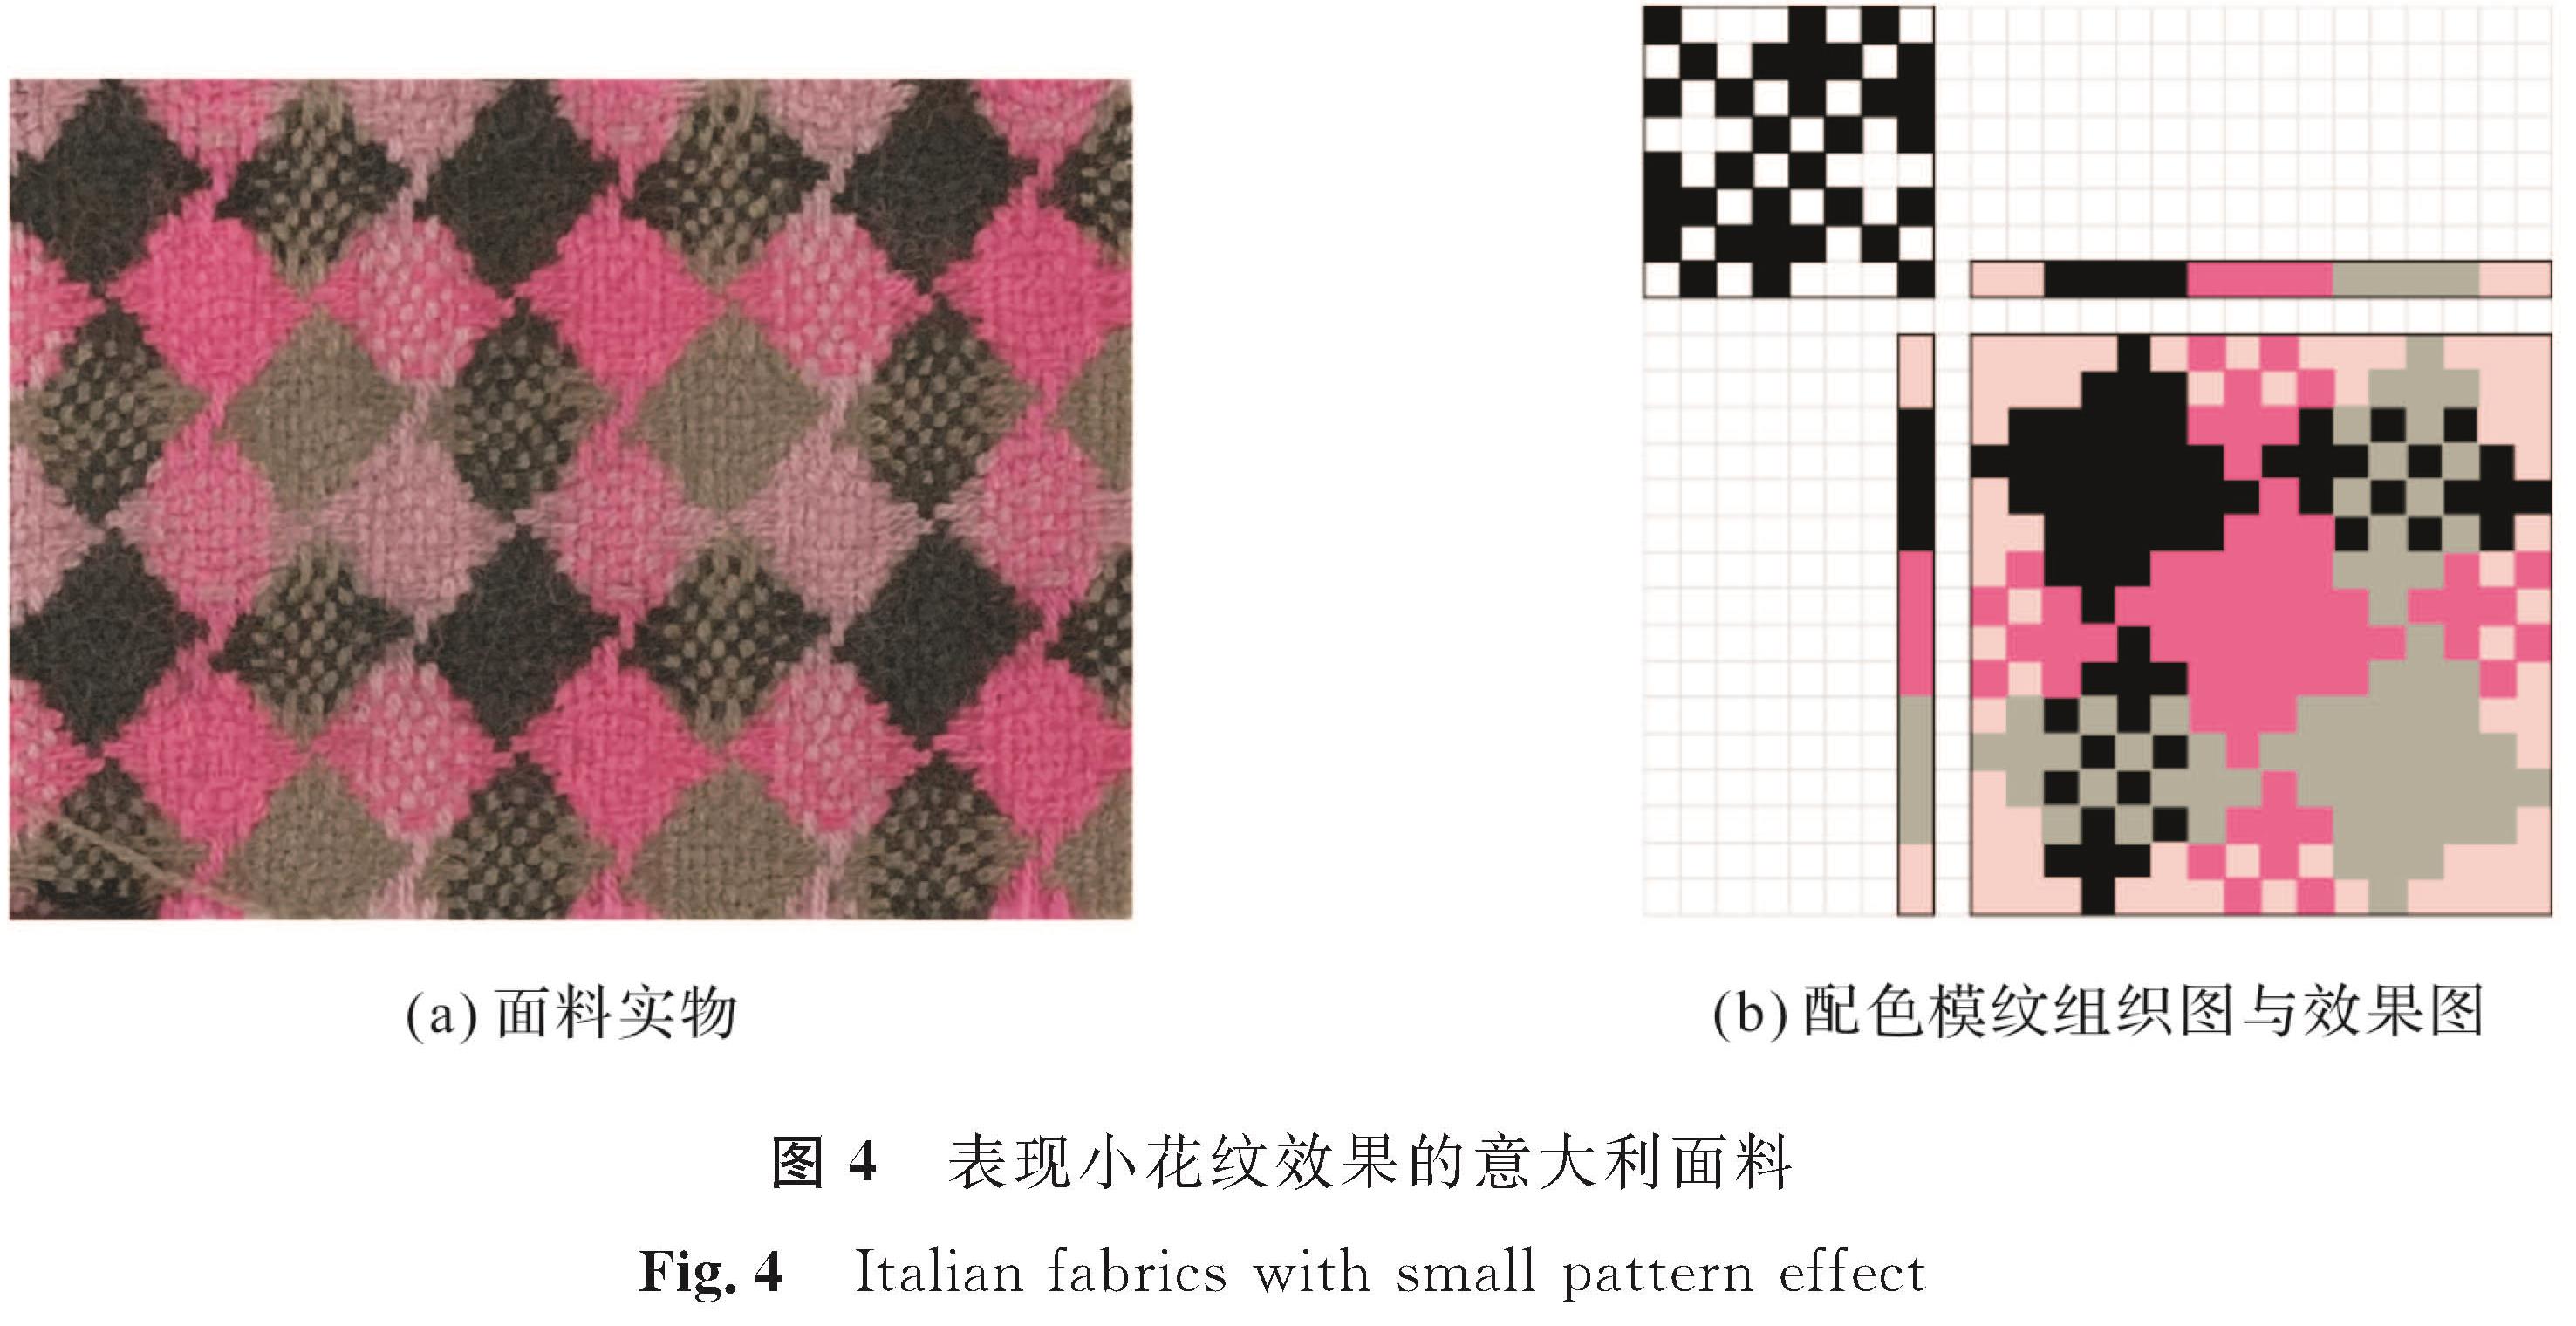 图4 表现小花纹效果的意大利面料<br/>Fig.4 Italian fabrics with small pattern effect